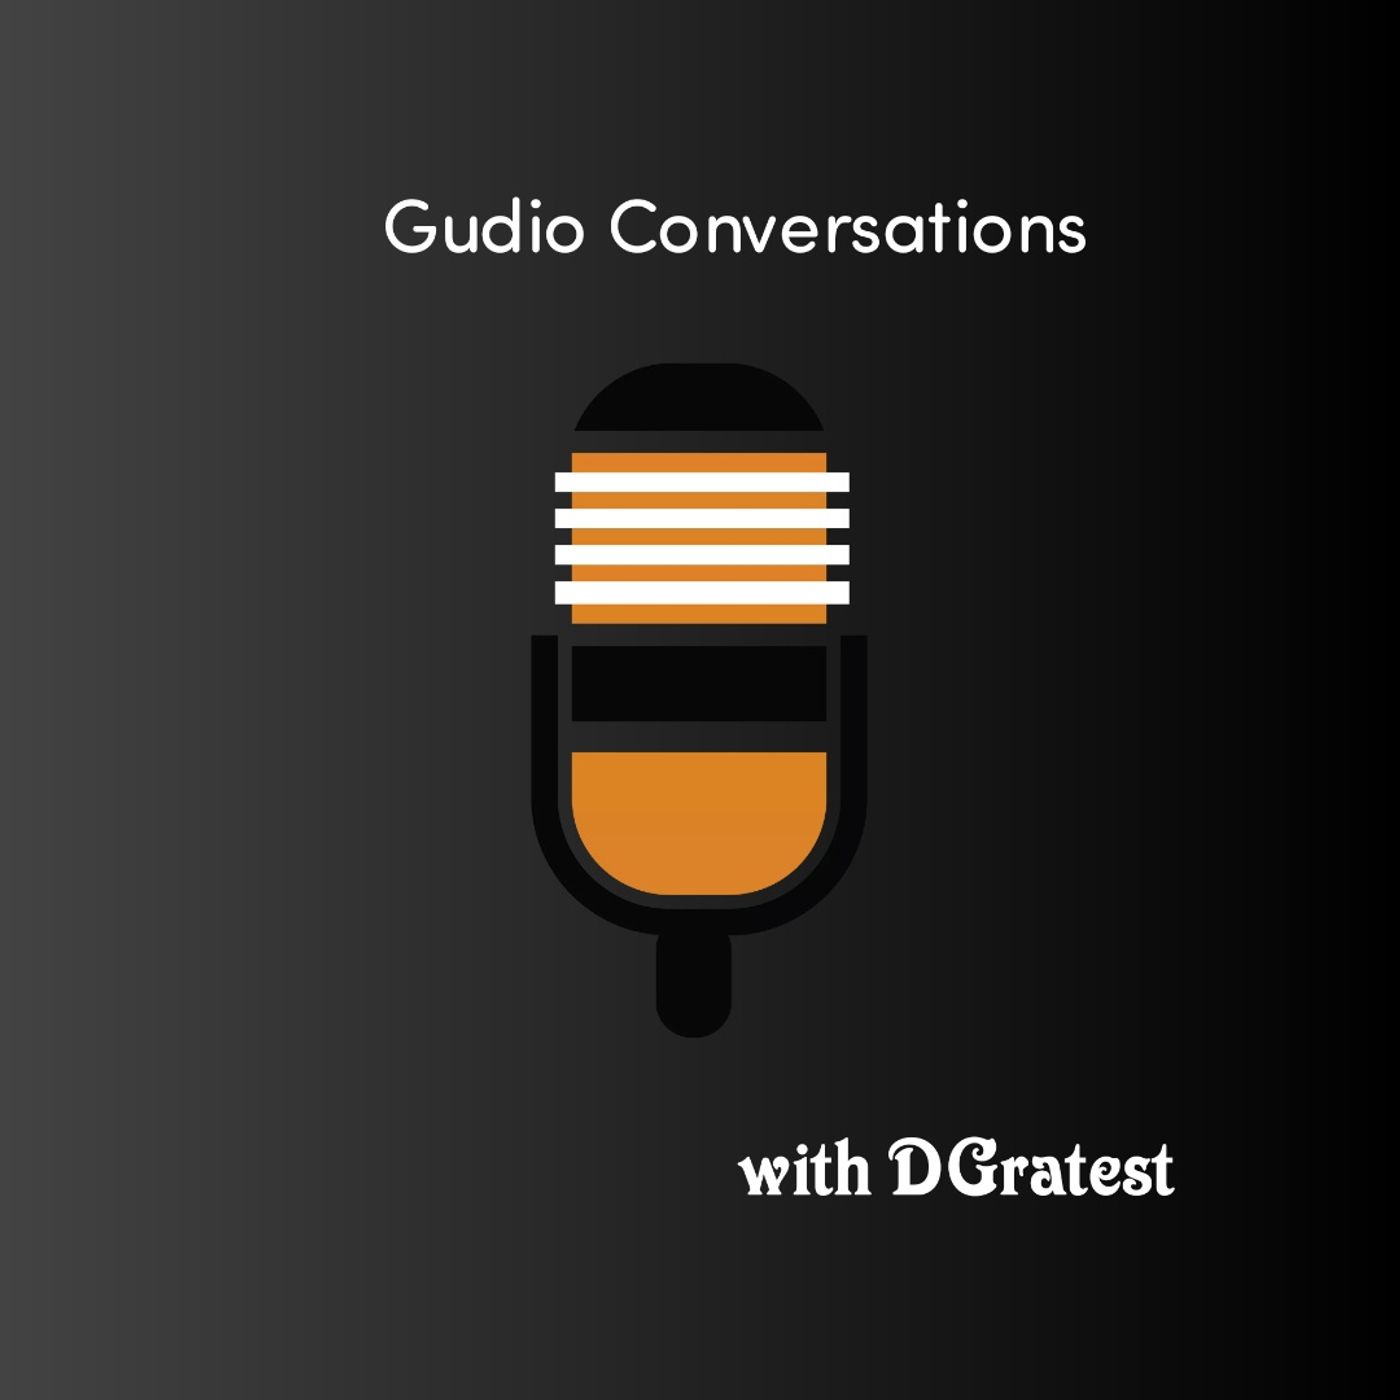 DGratest Sunday Night Love Jones Presents : Late Night Gudio Conversations